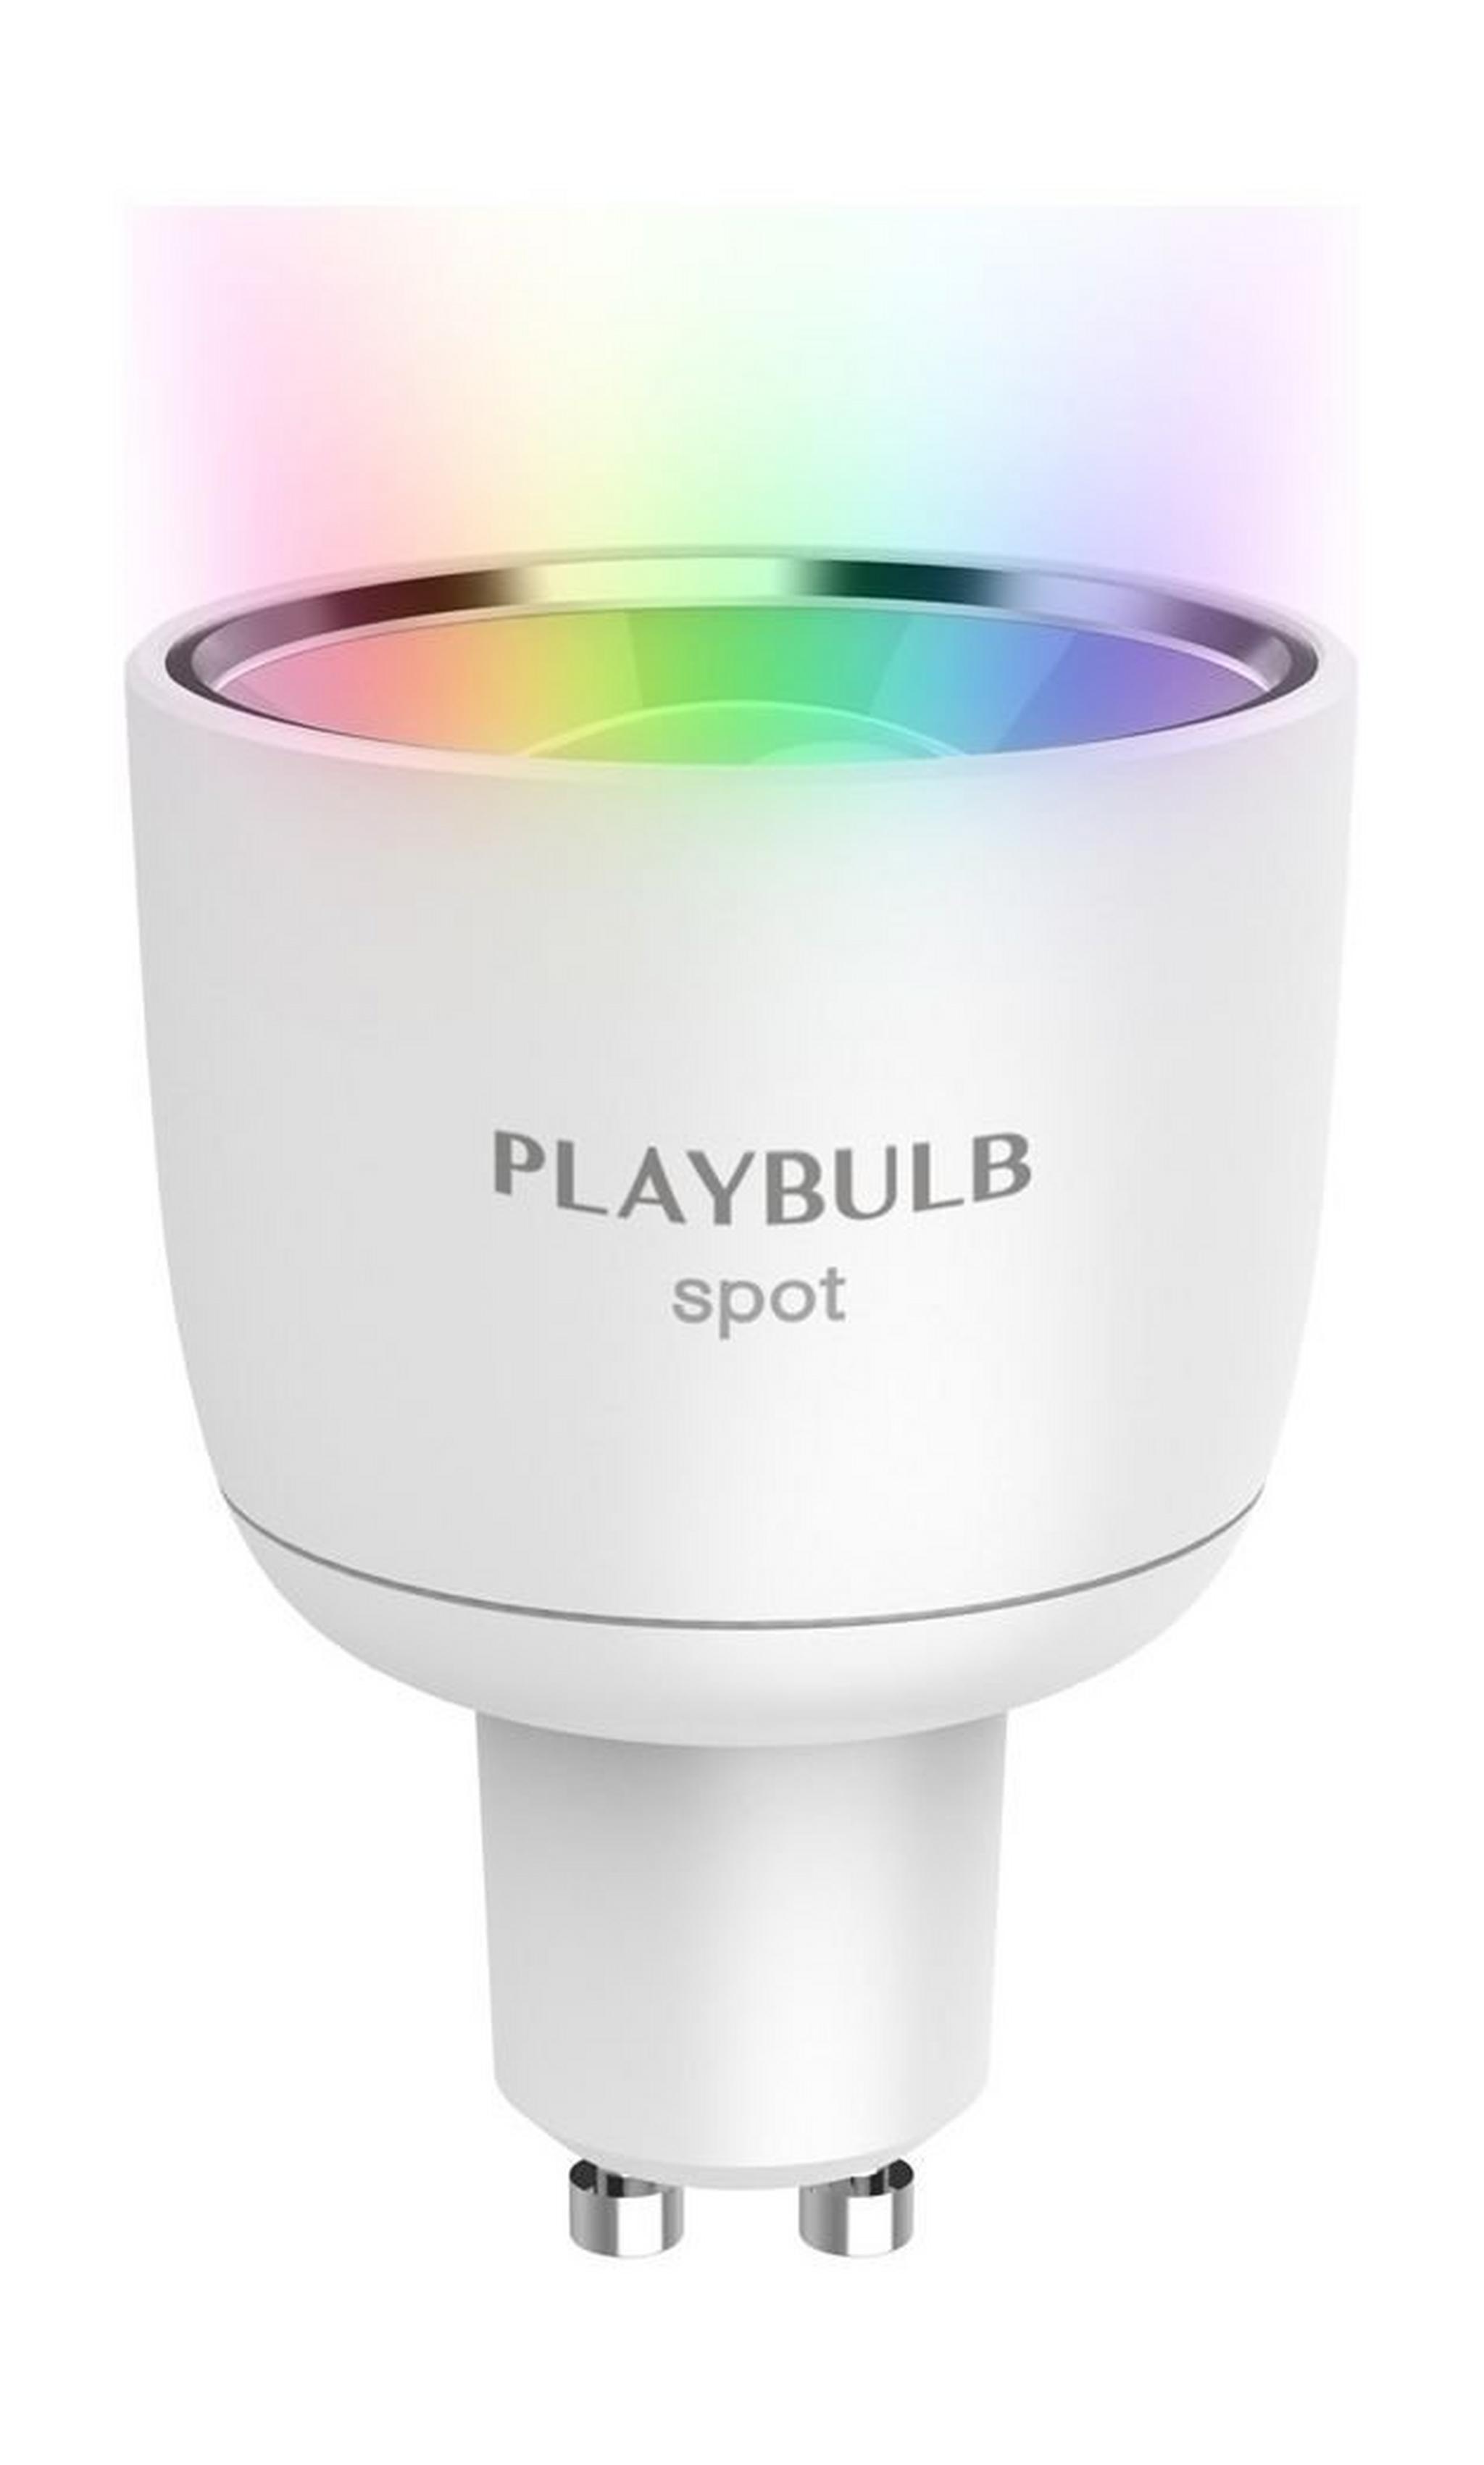 Mipow Playbulb Spot Bluetooth Smart LED Light